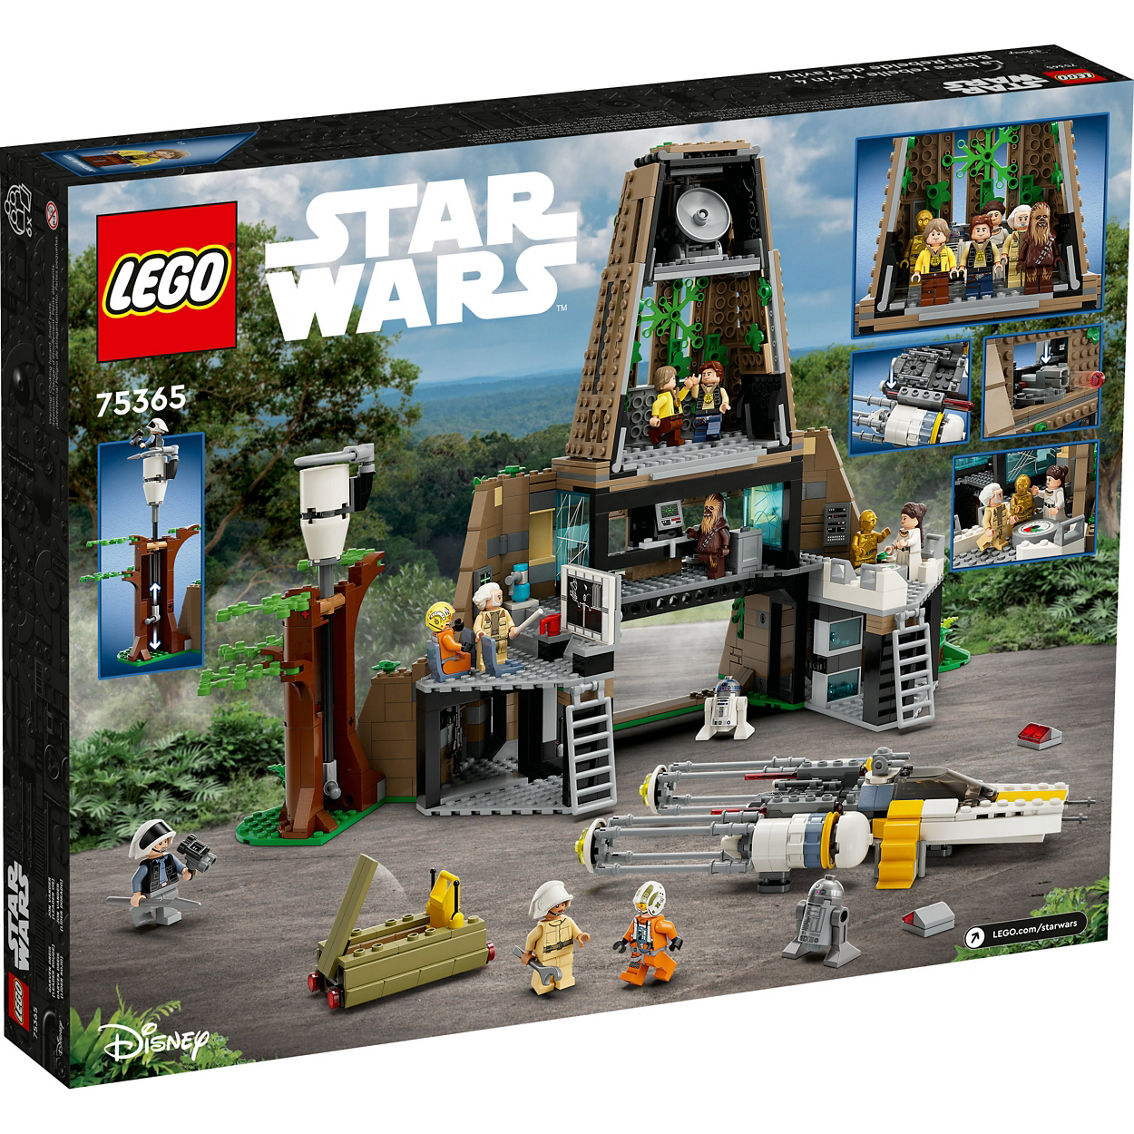 LEGO Star Wars Yavin 4 Rebel Base 75365 Building Toy Set - Image 2 of 9